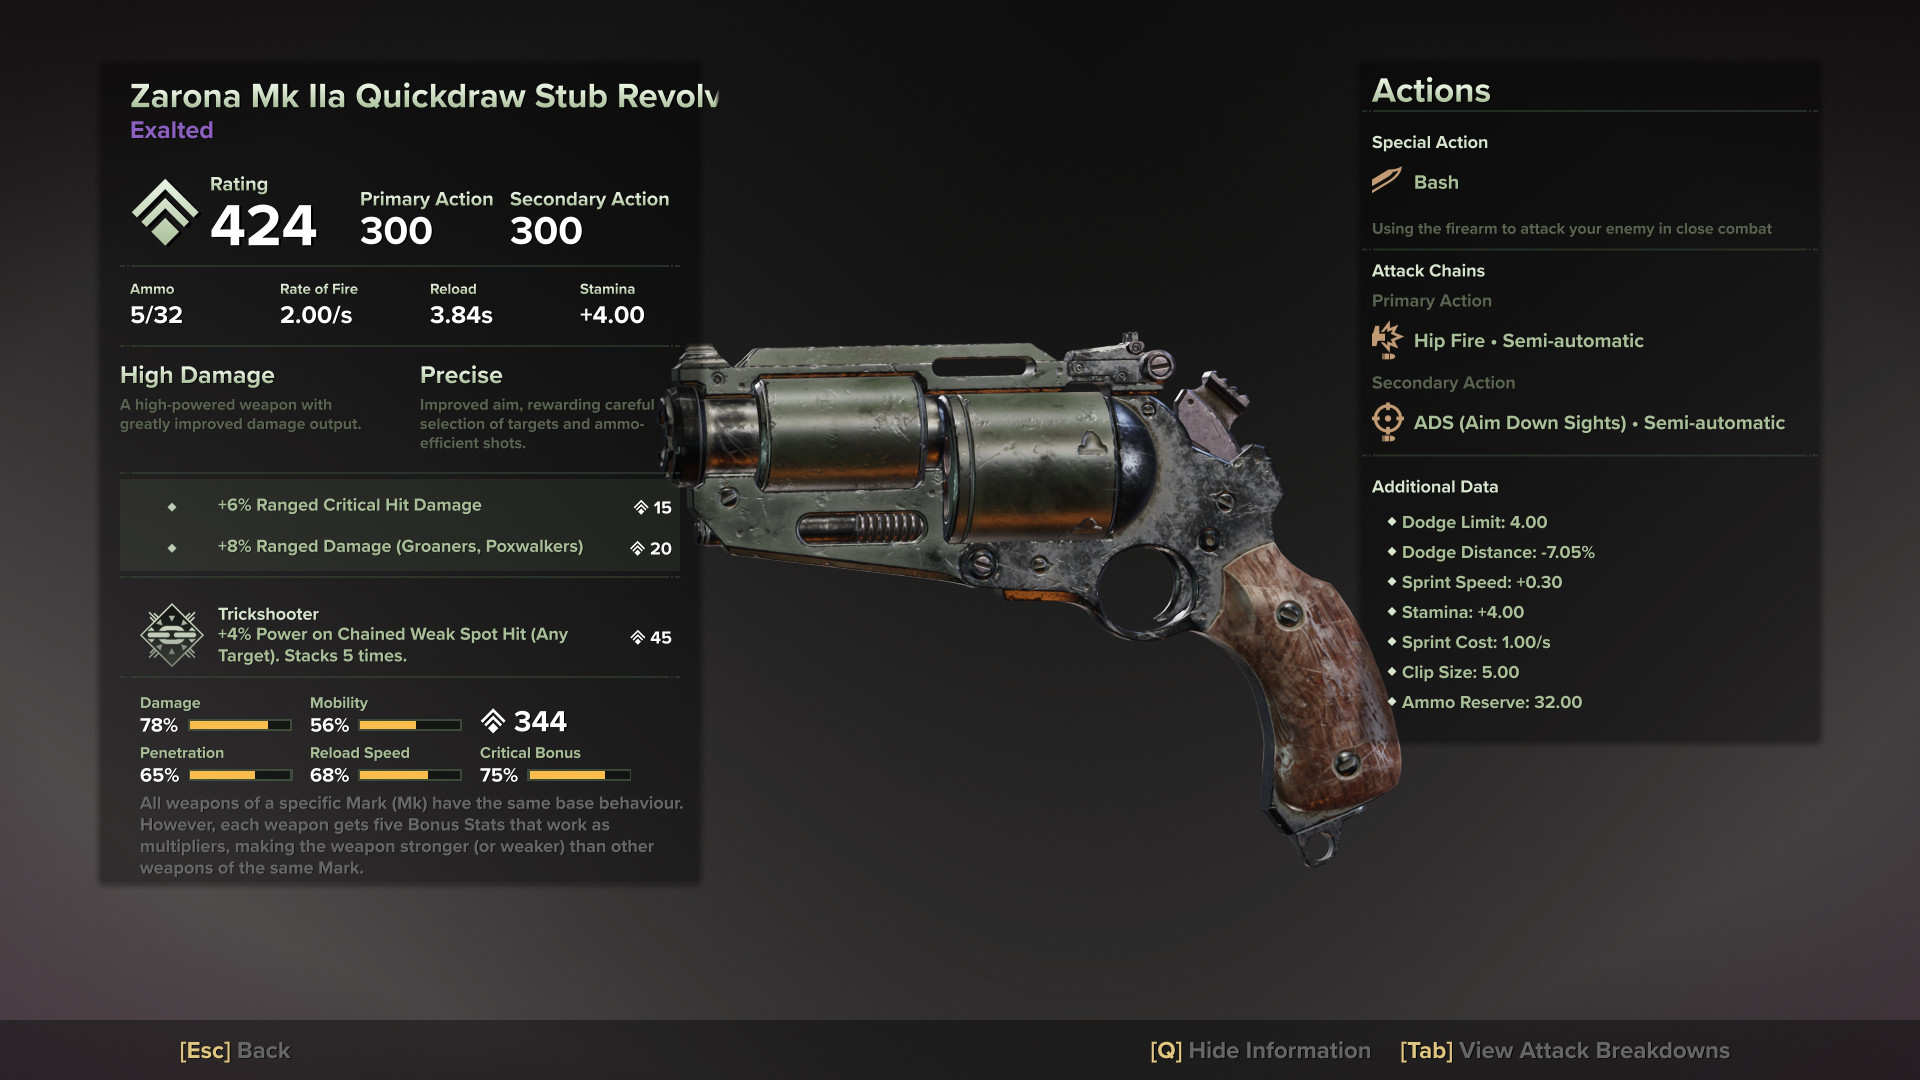 Zarona Mk IIa Quickdraw Stub Revolver